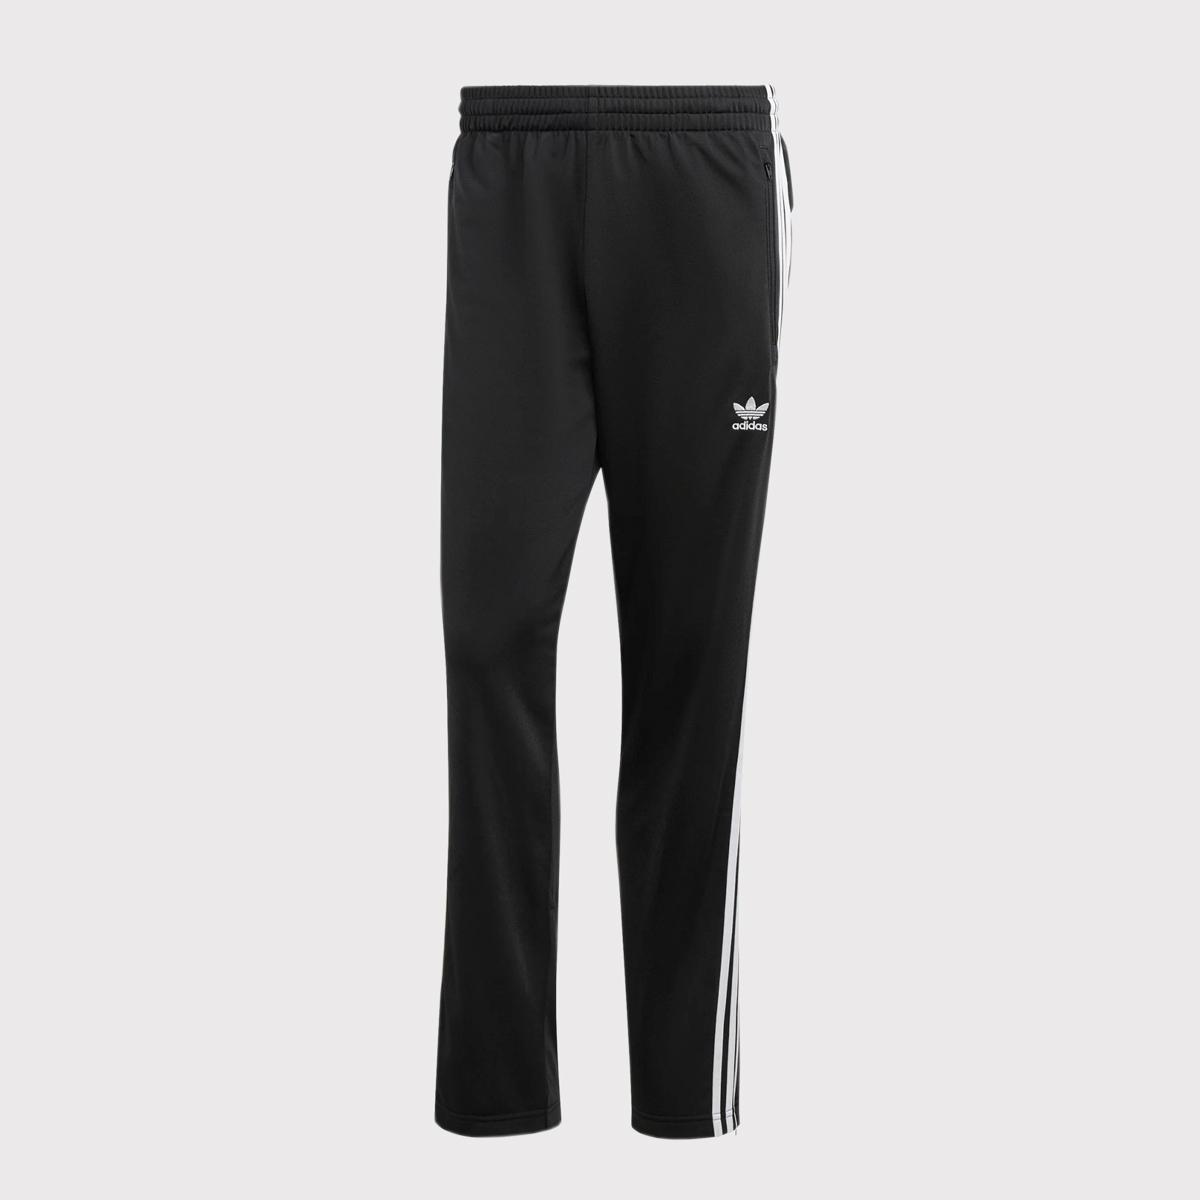 Adidas – Firebird Track Pants Black/White